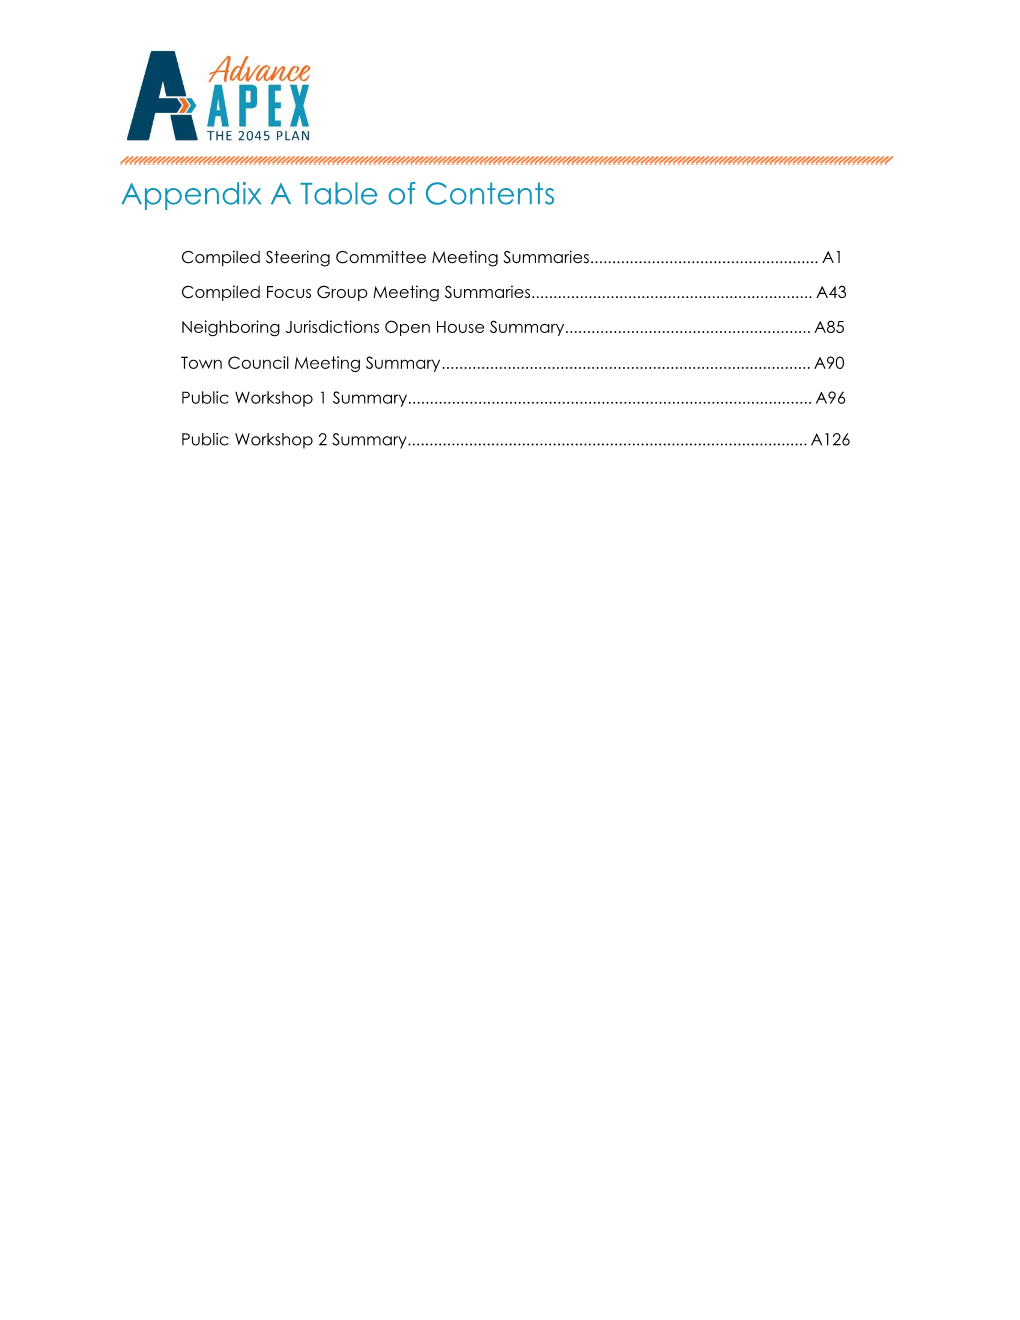 Appendix a Table of Contents